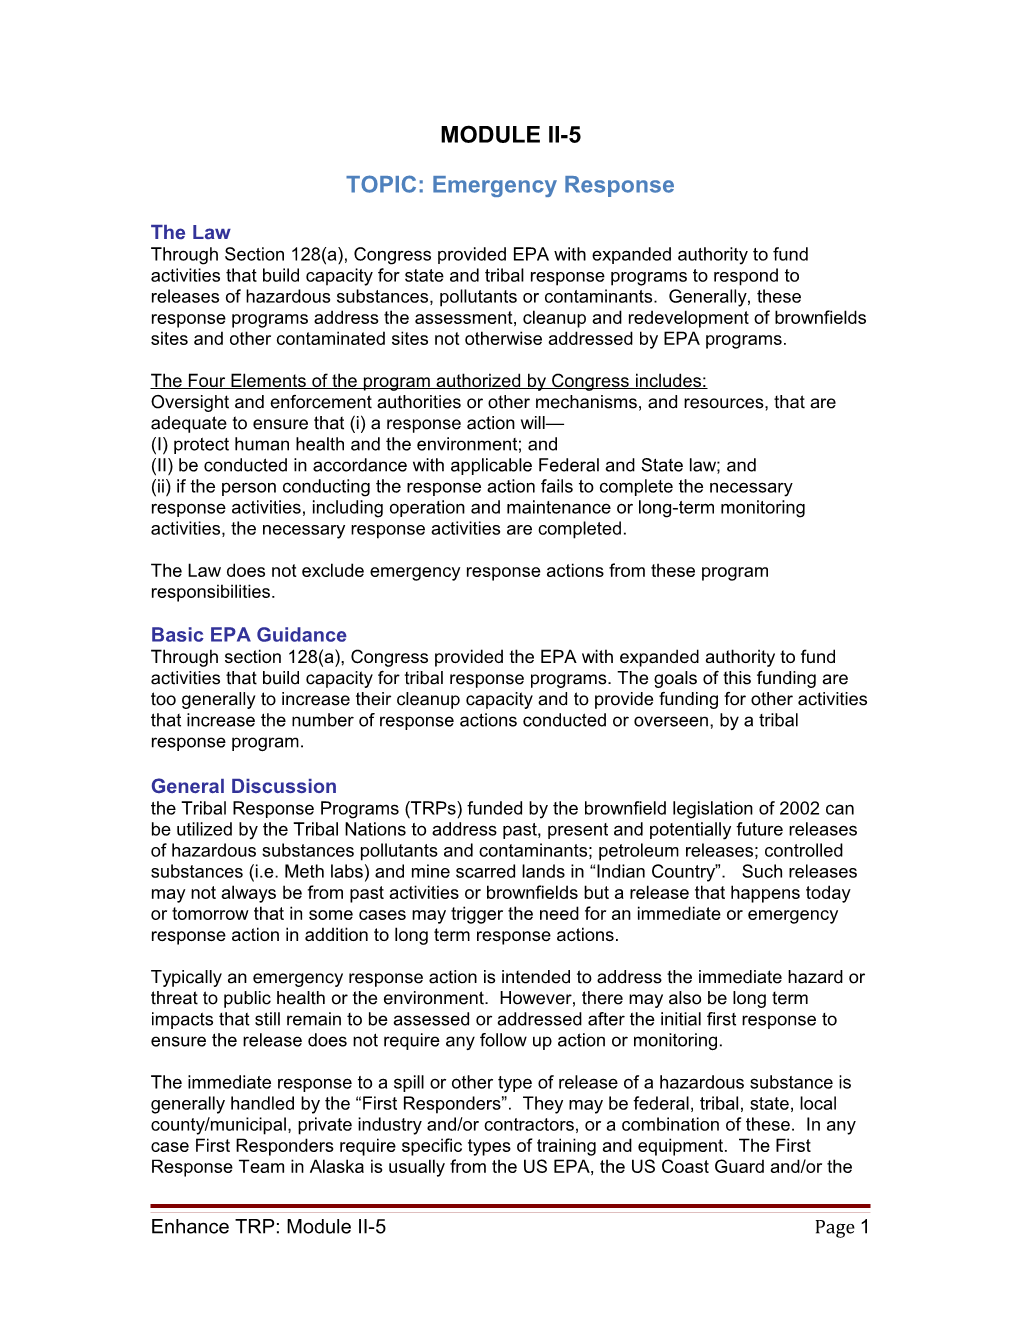 TOPIC: Emergency Response